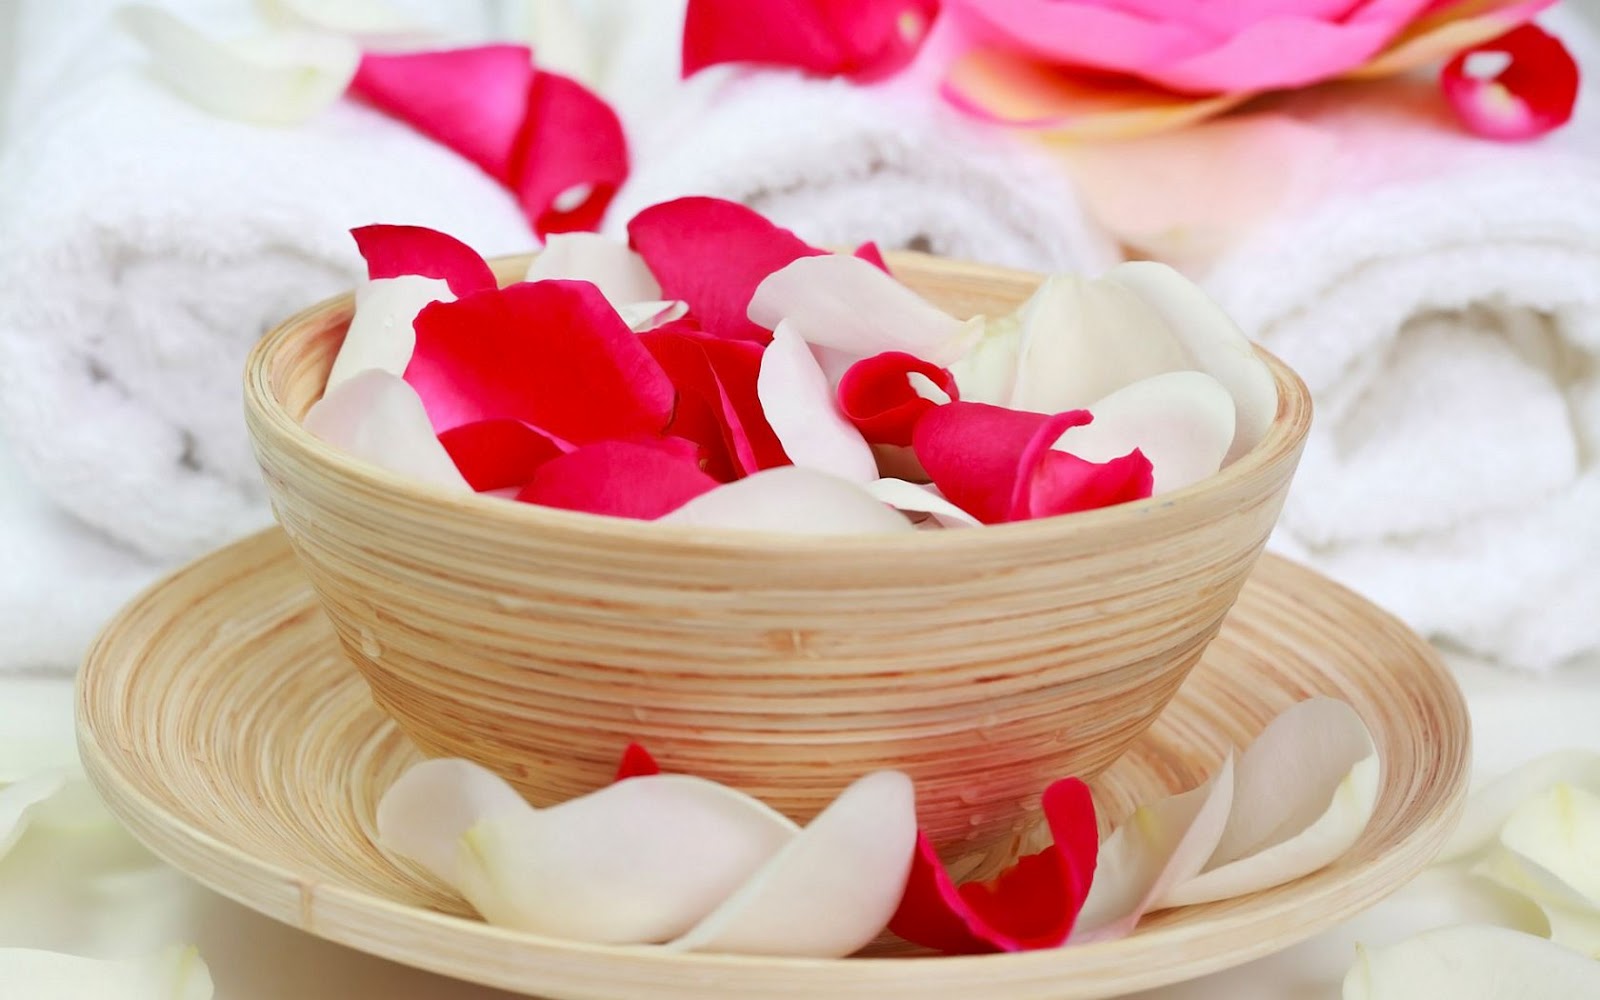 Red White Rose Petals Towels Spa Center Hd Wallpaper - Hình Ảnh Cánh Hoa Hồng - HD Wallpaper 